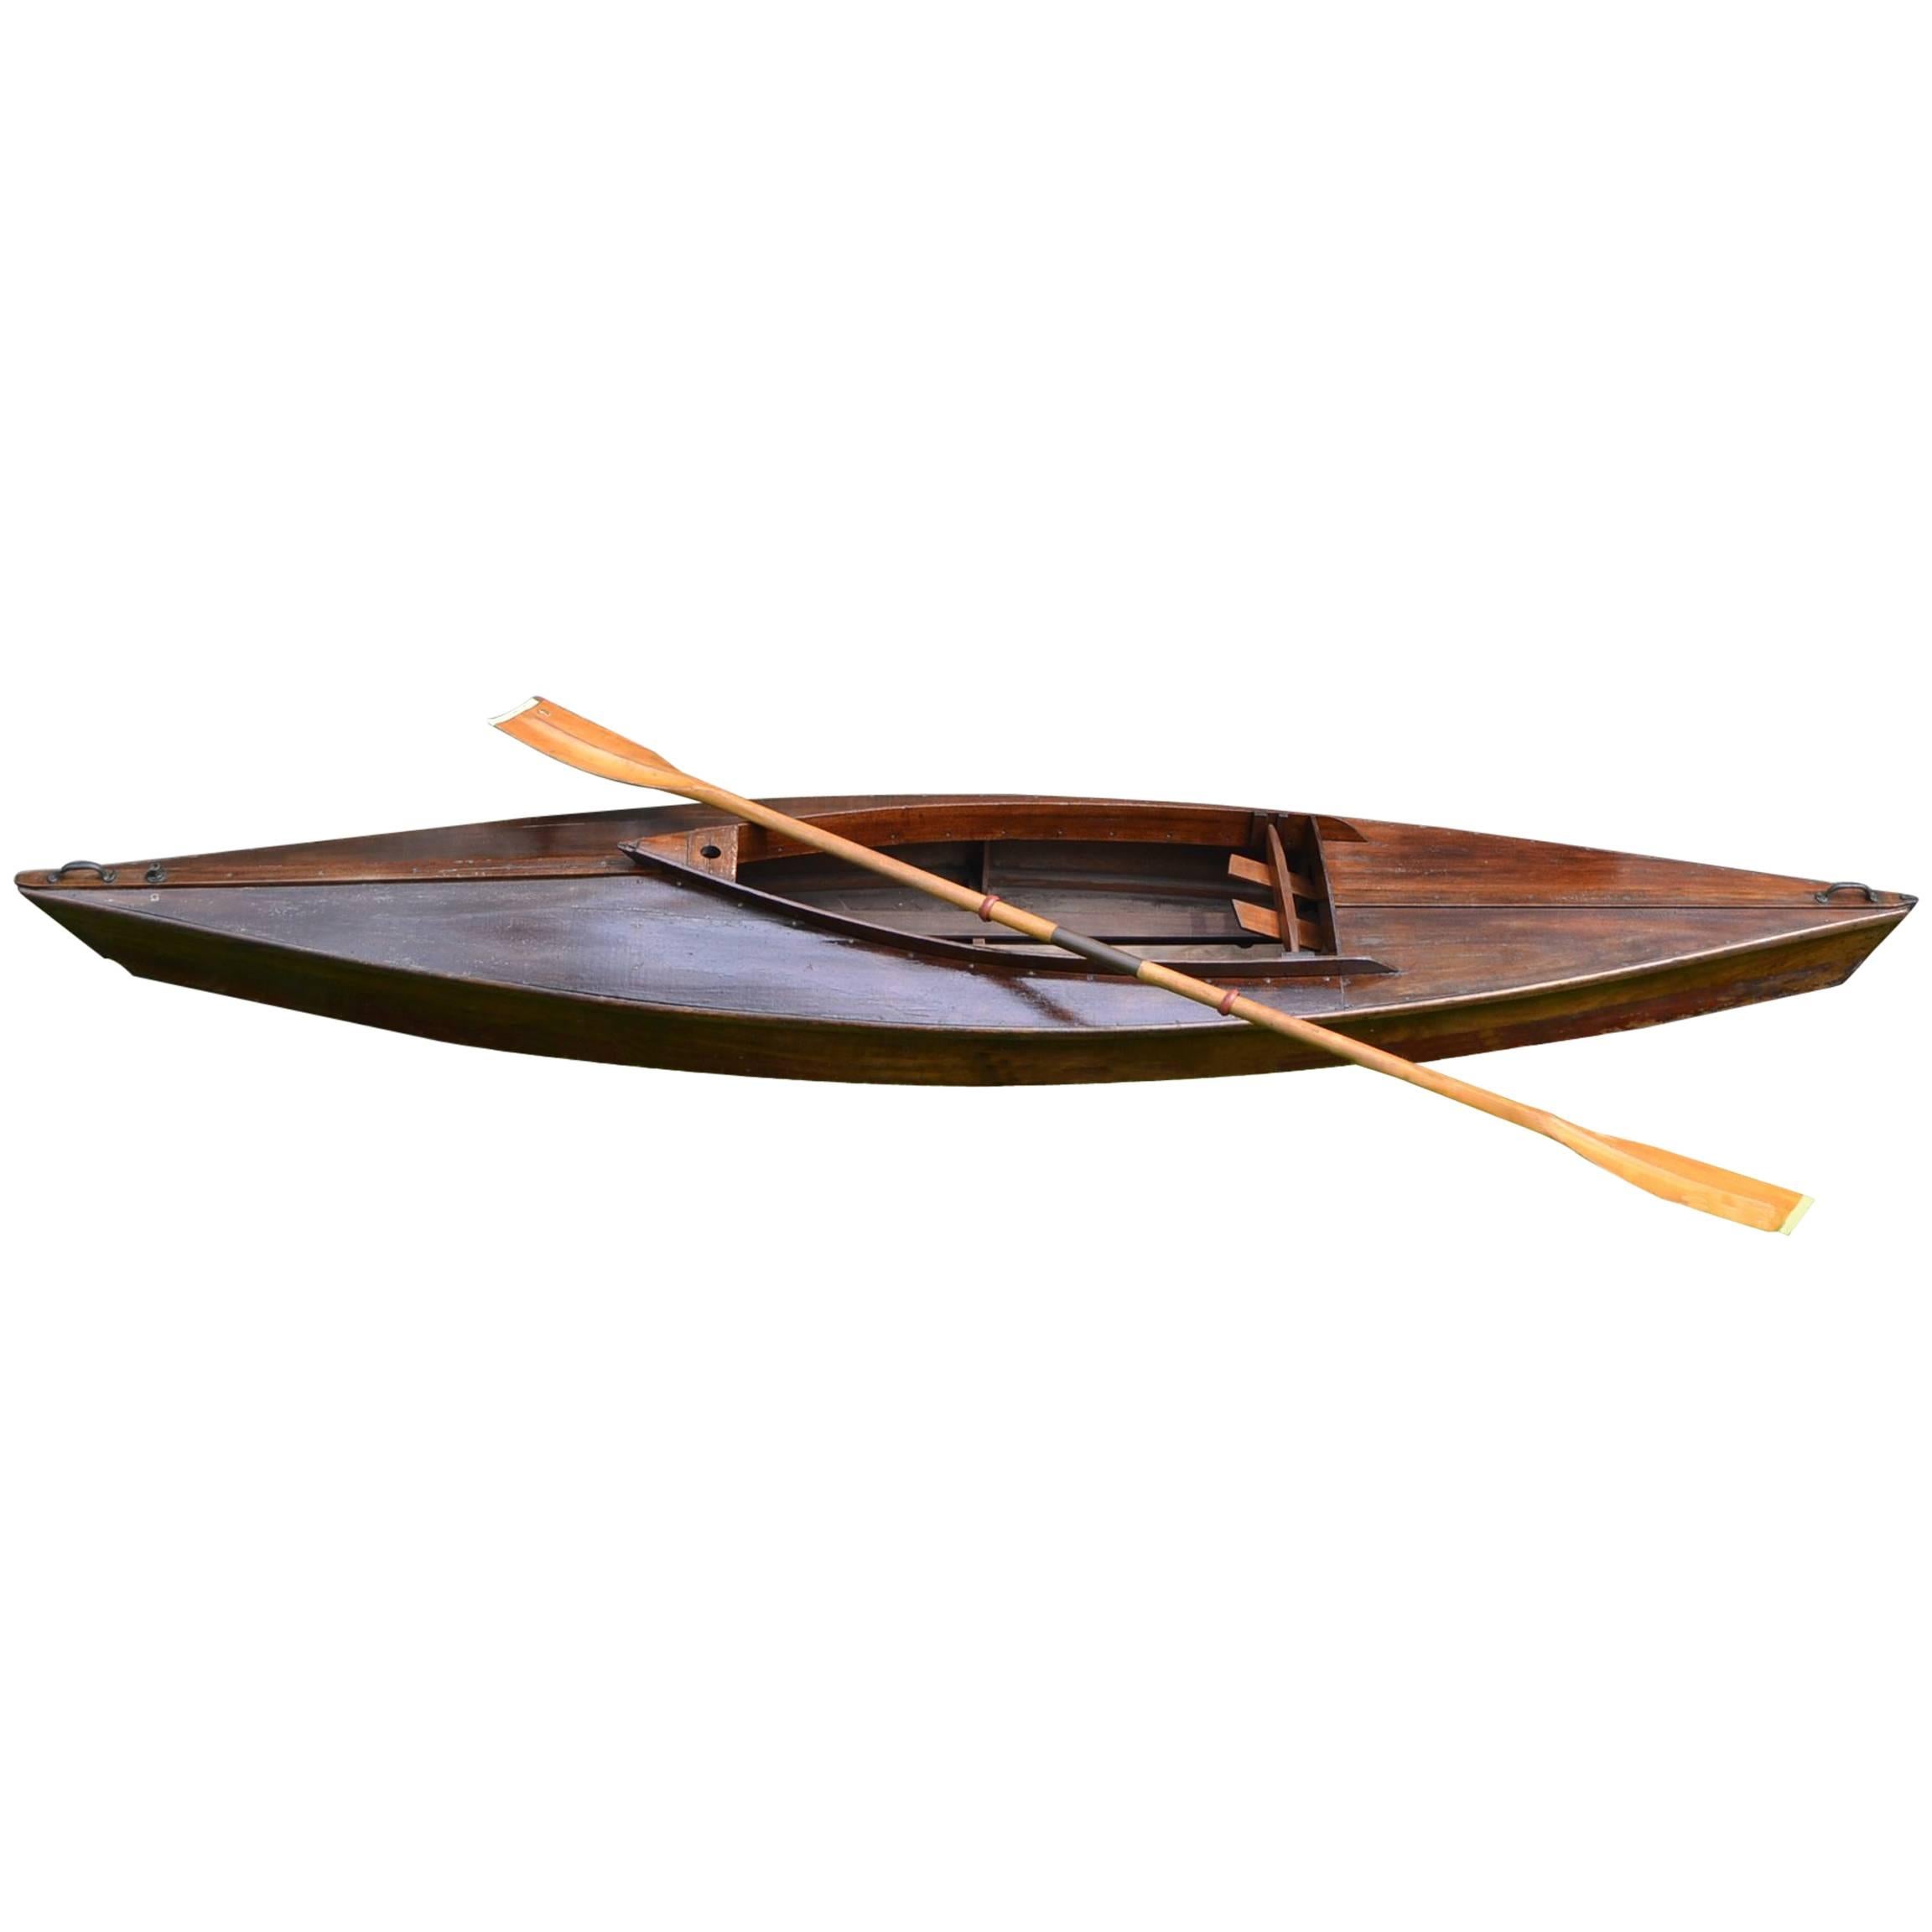 Antique Wooden Canoe